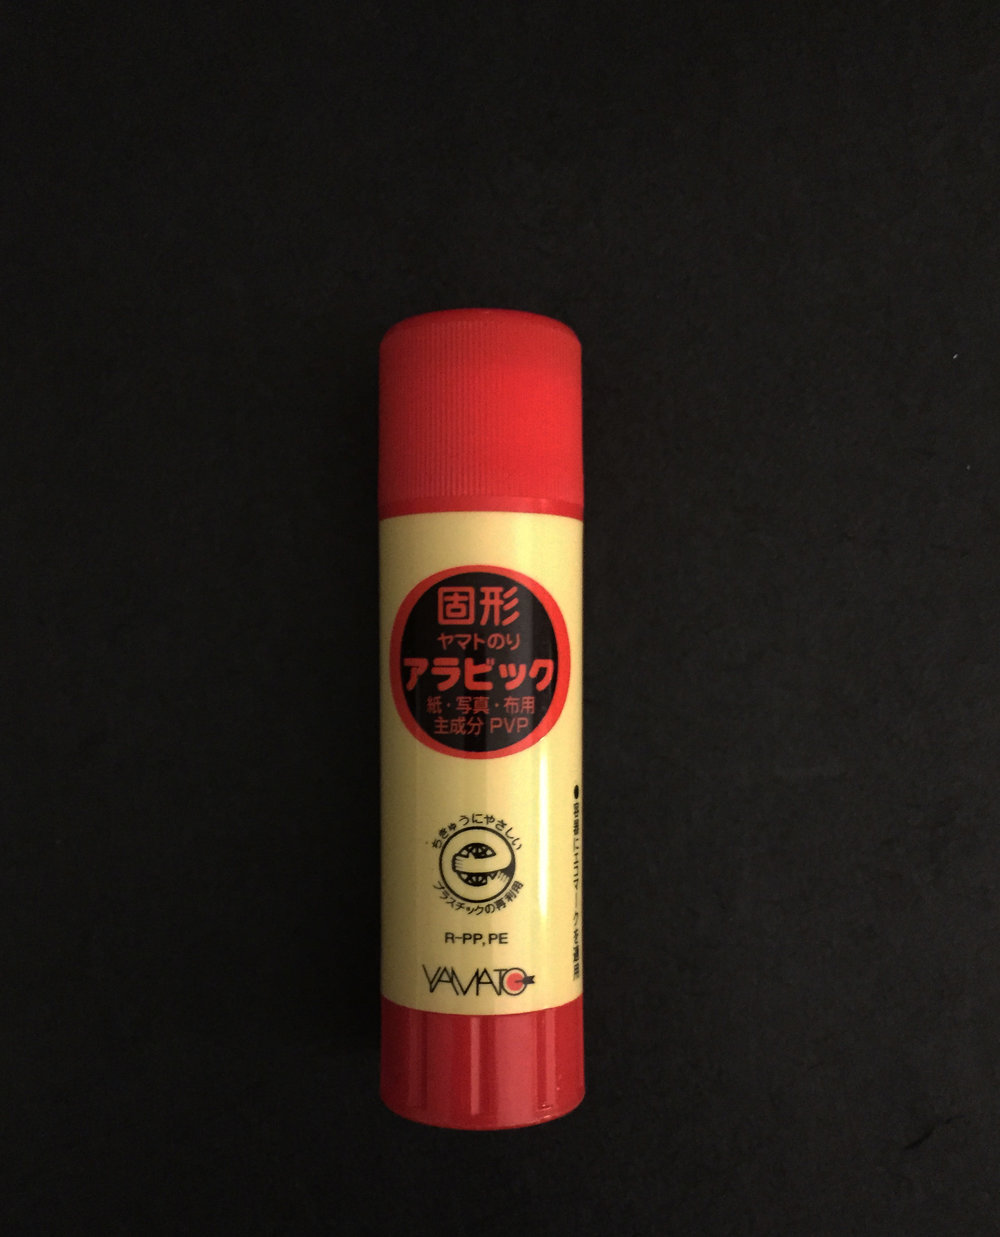 Yamato Japanese Starch Glue Stick Acid Free and Non-toxic